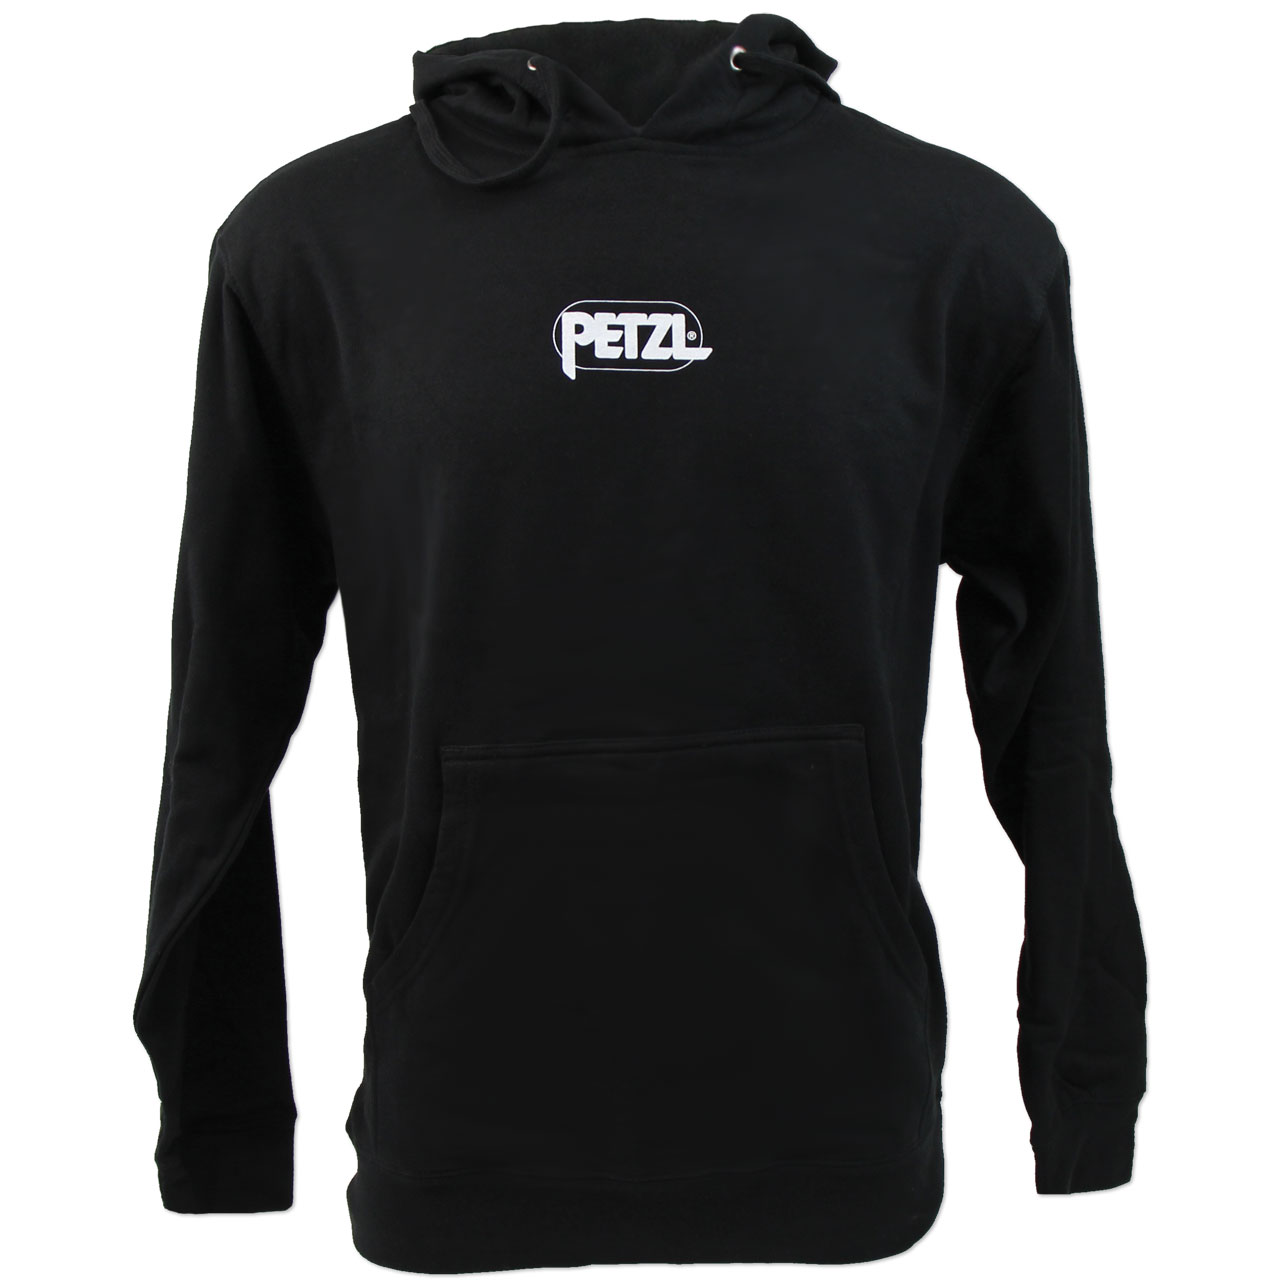 Petzl logo sweatshirt